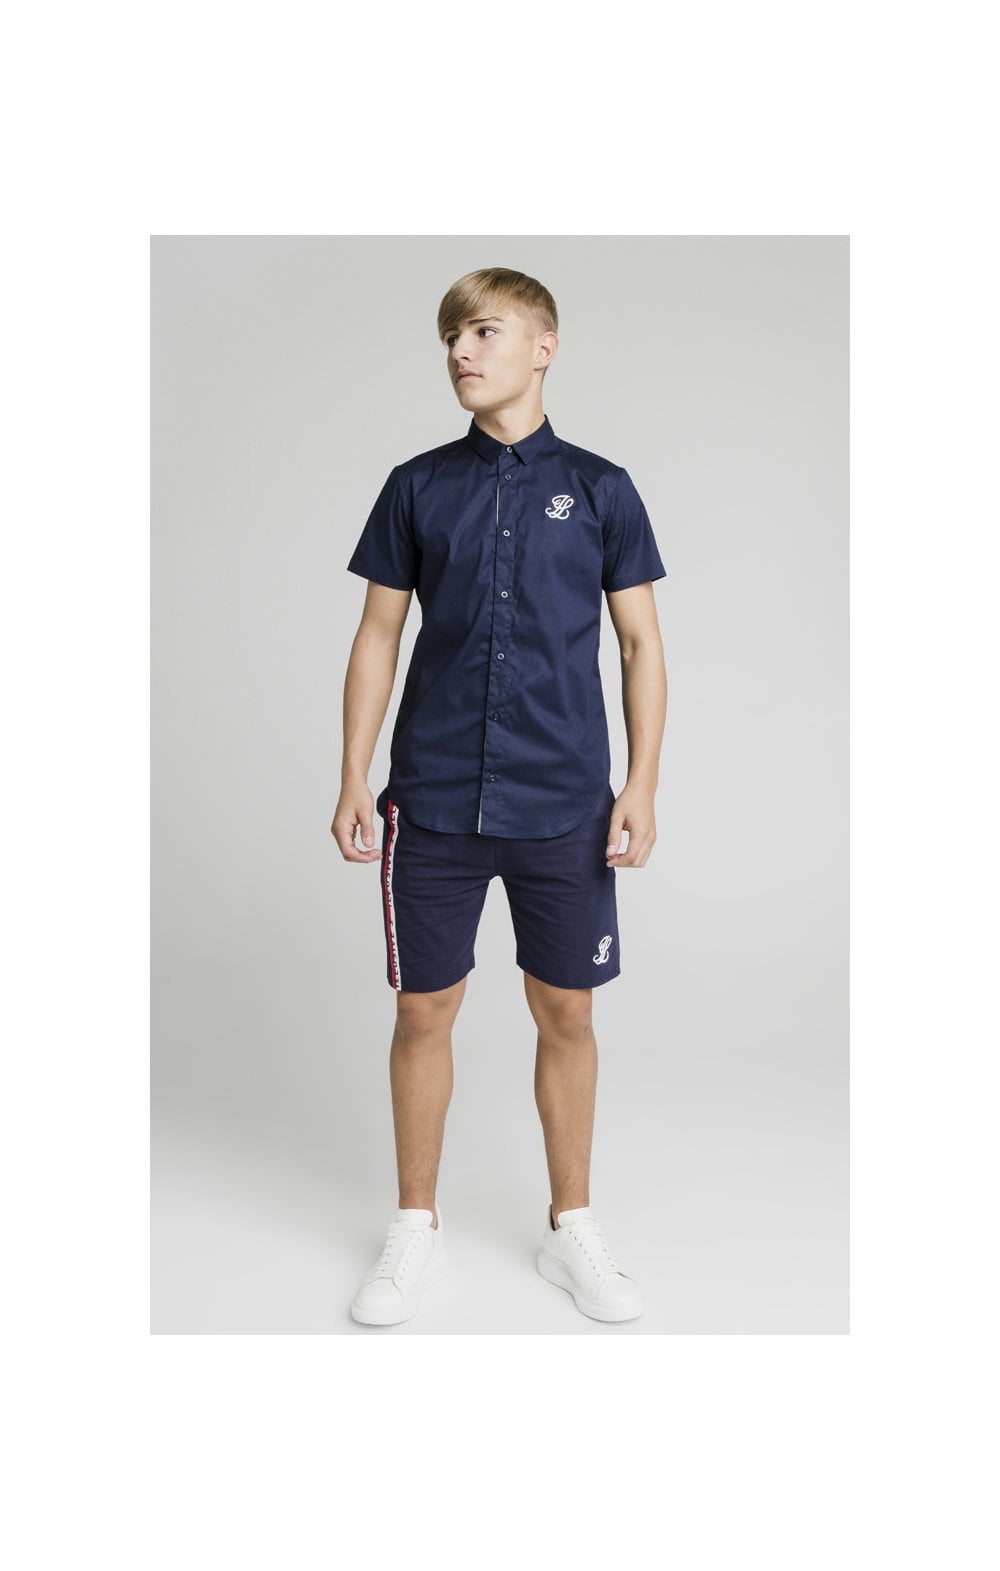 Illusive London Side Tape Jersey Shorts - Navy (4)